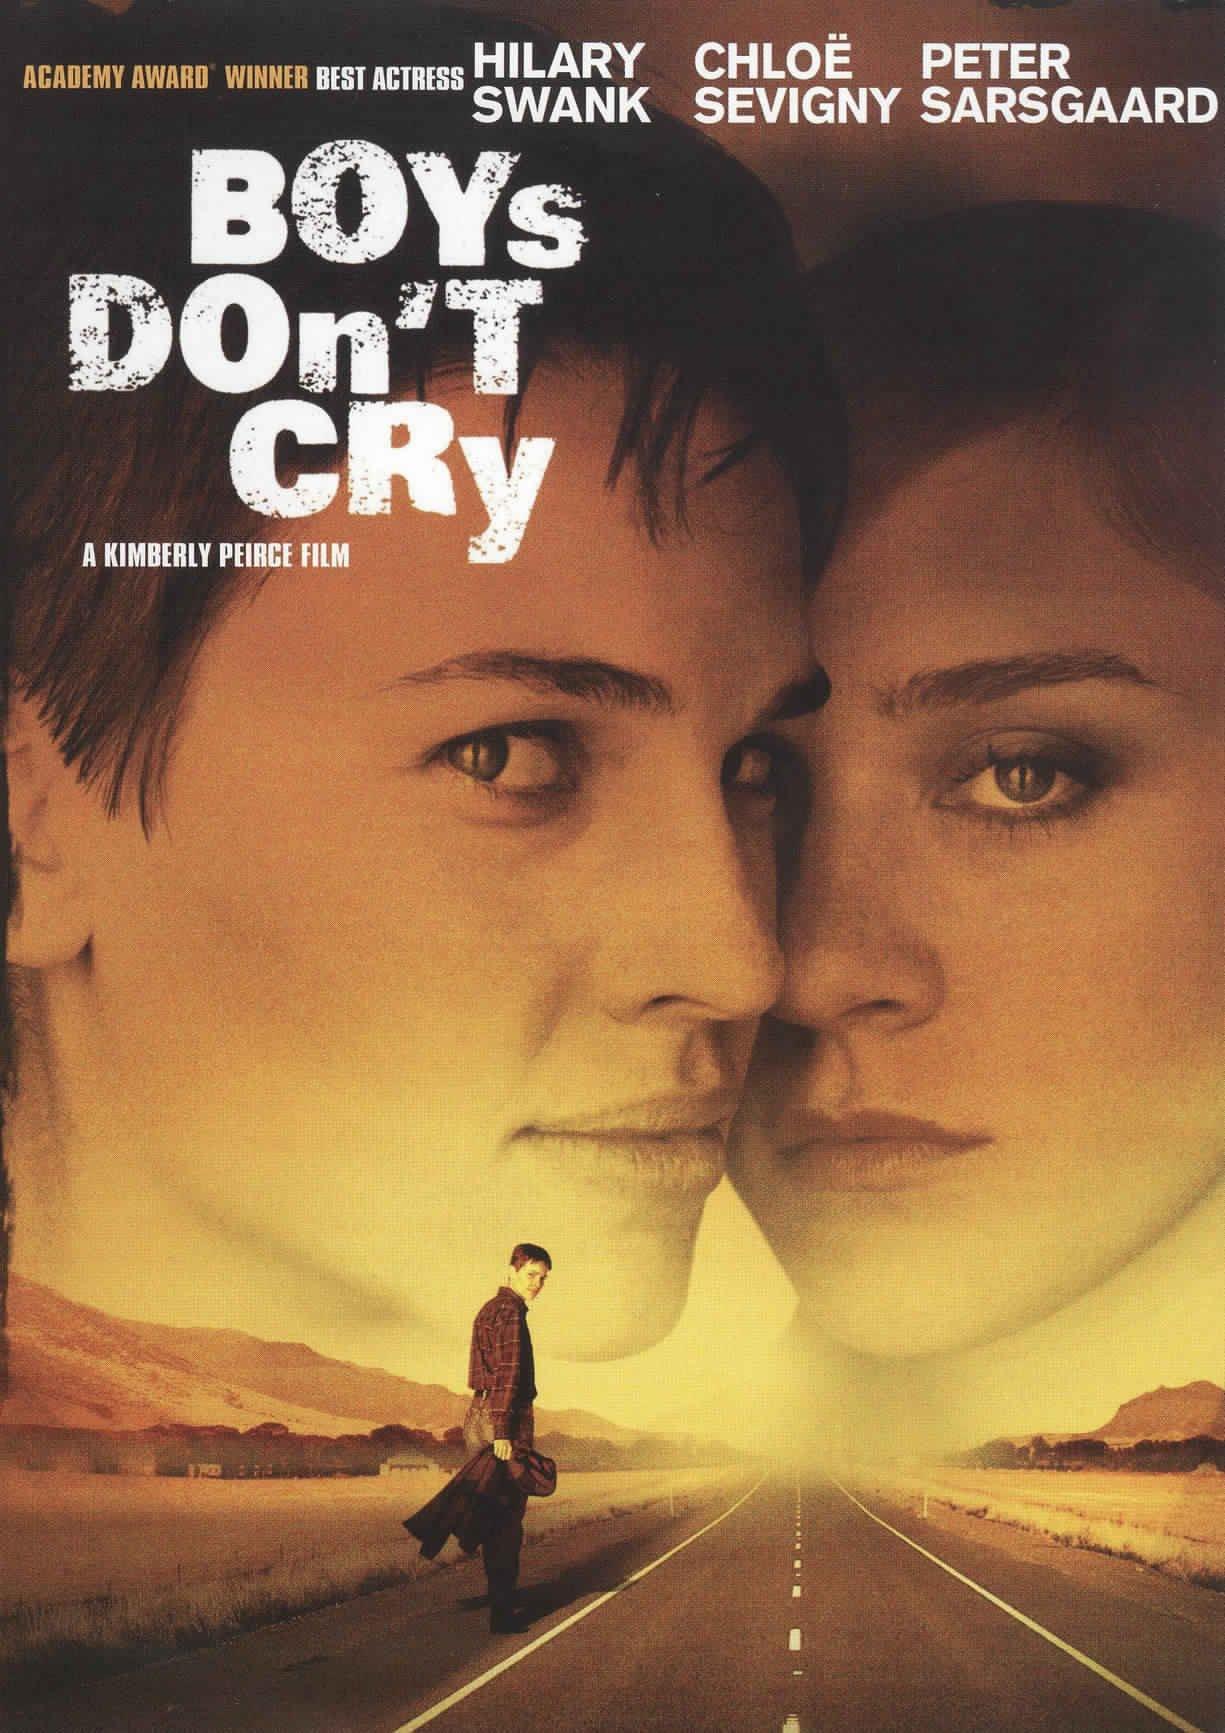 Poster phim Boys Don't Cry. Ảnh: Internet